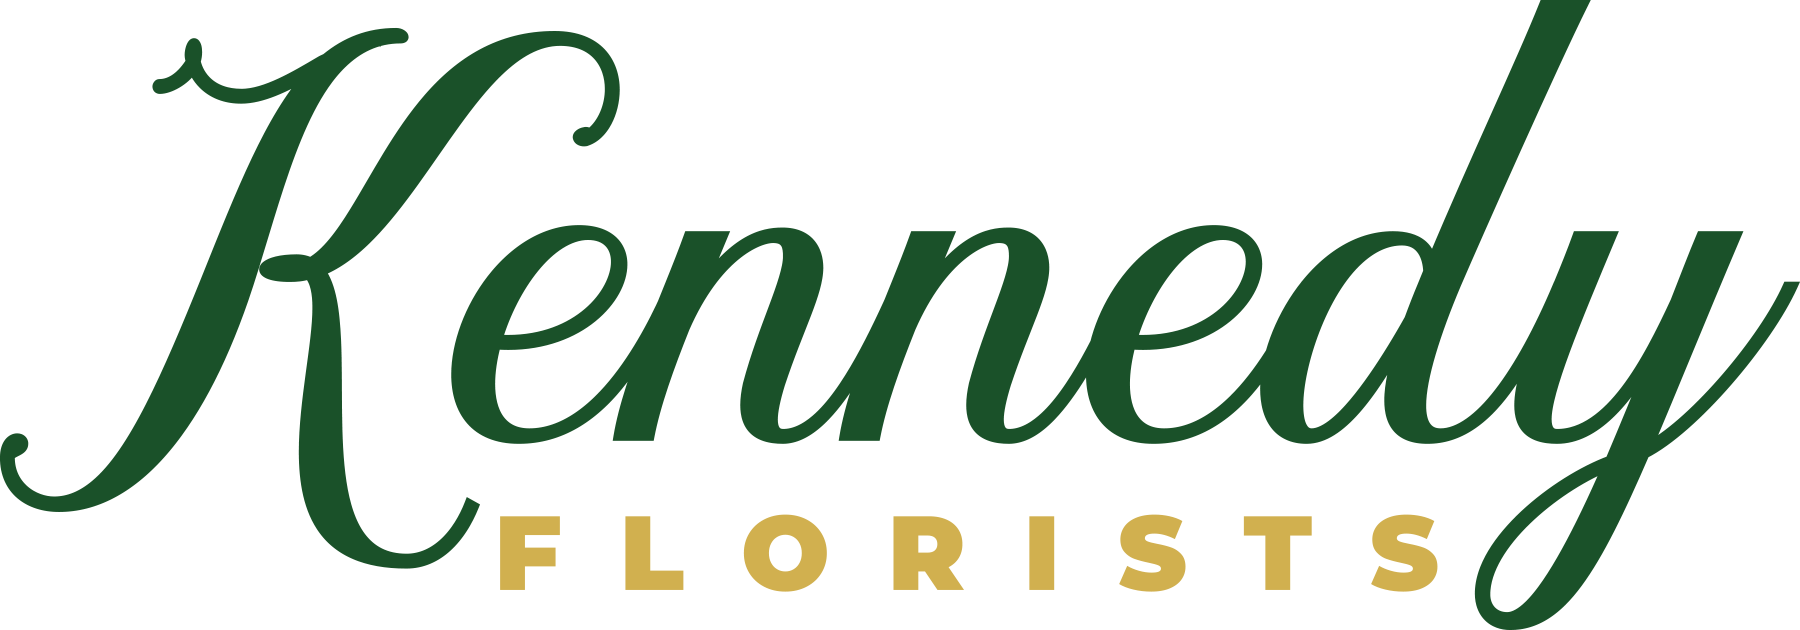 Kennedy Florists - Logo